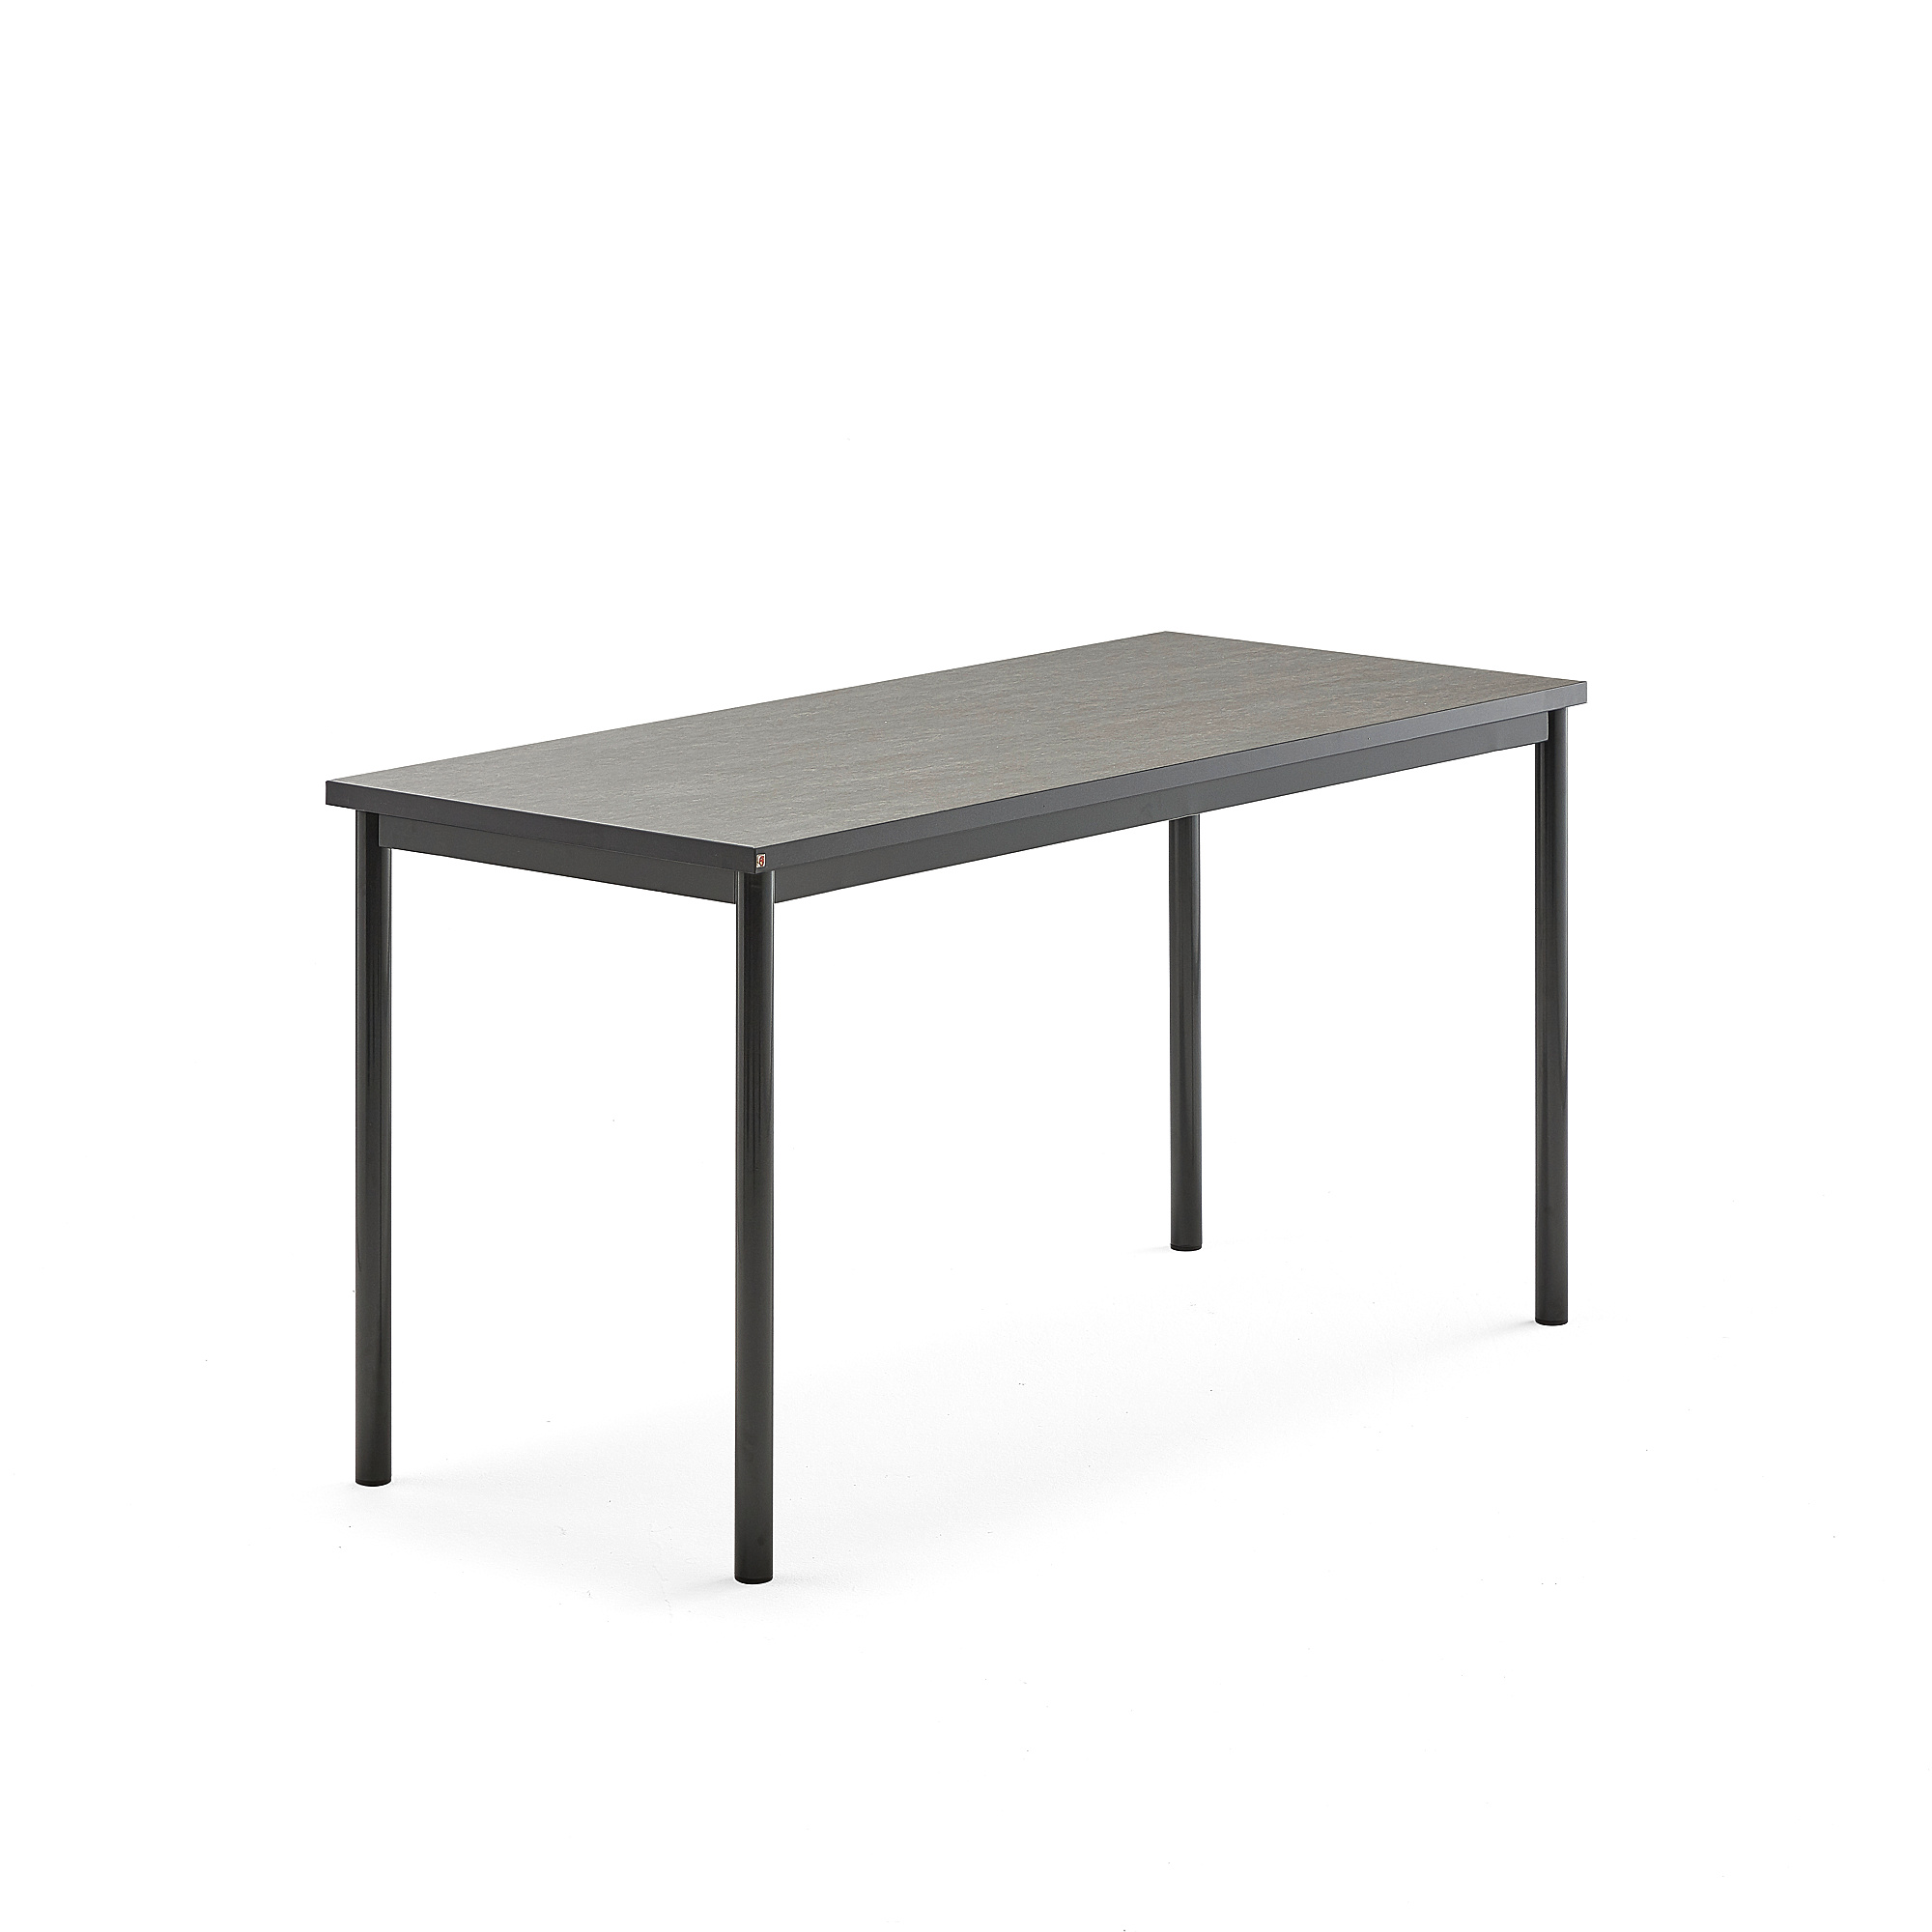 Stůl SONITUS, 1400x600x720 mm, antracitově šedé nohy, deska s linoleem, tmavě šedá